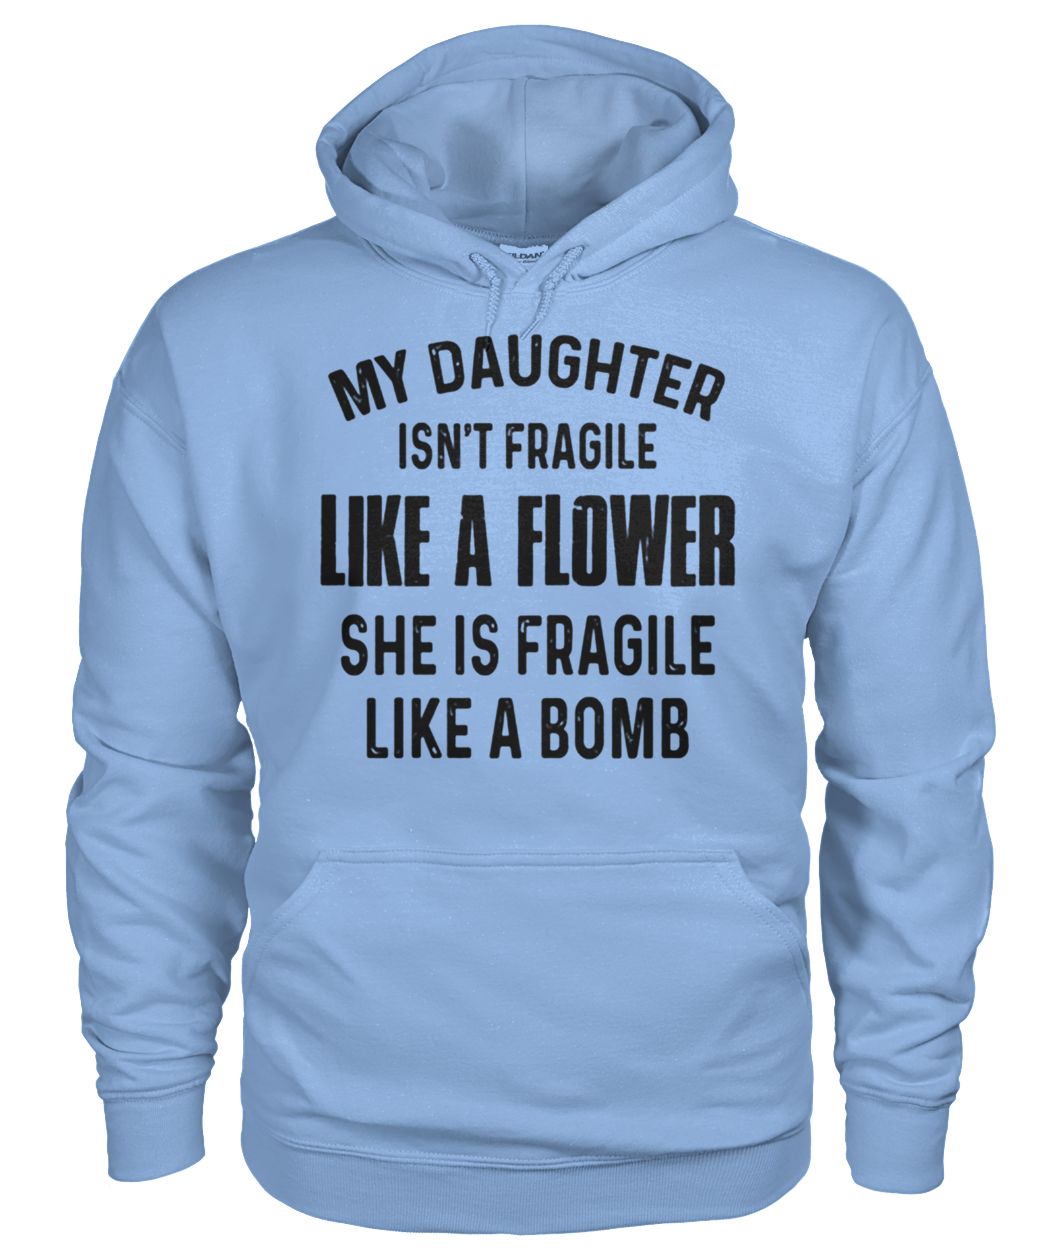 My daughter isn't fragile like a flower she is fragile like a bomb gildan hoodie